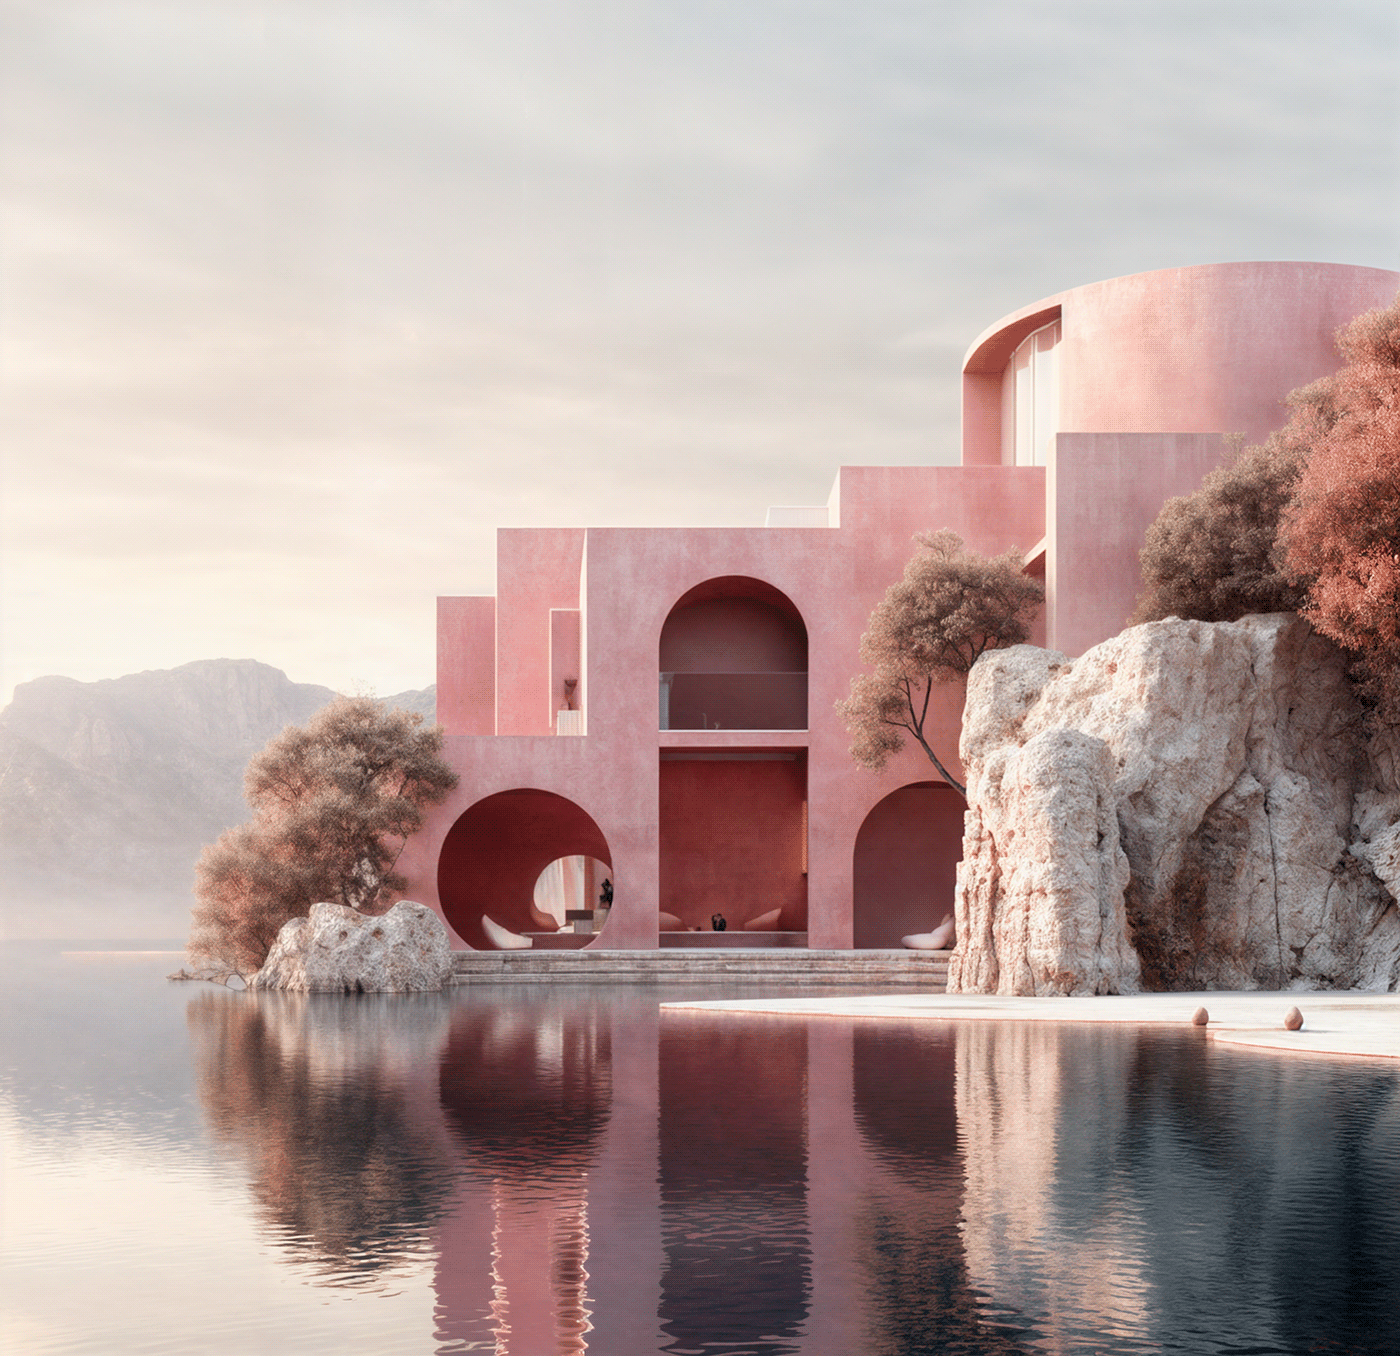 archviz Brutalist Brutalism architecture visualization dreamscape Render architectural design brutalism design pink architecture